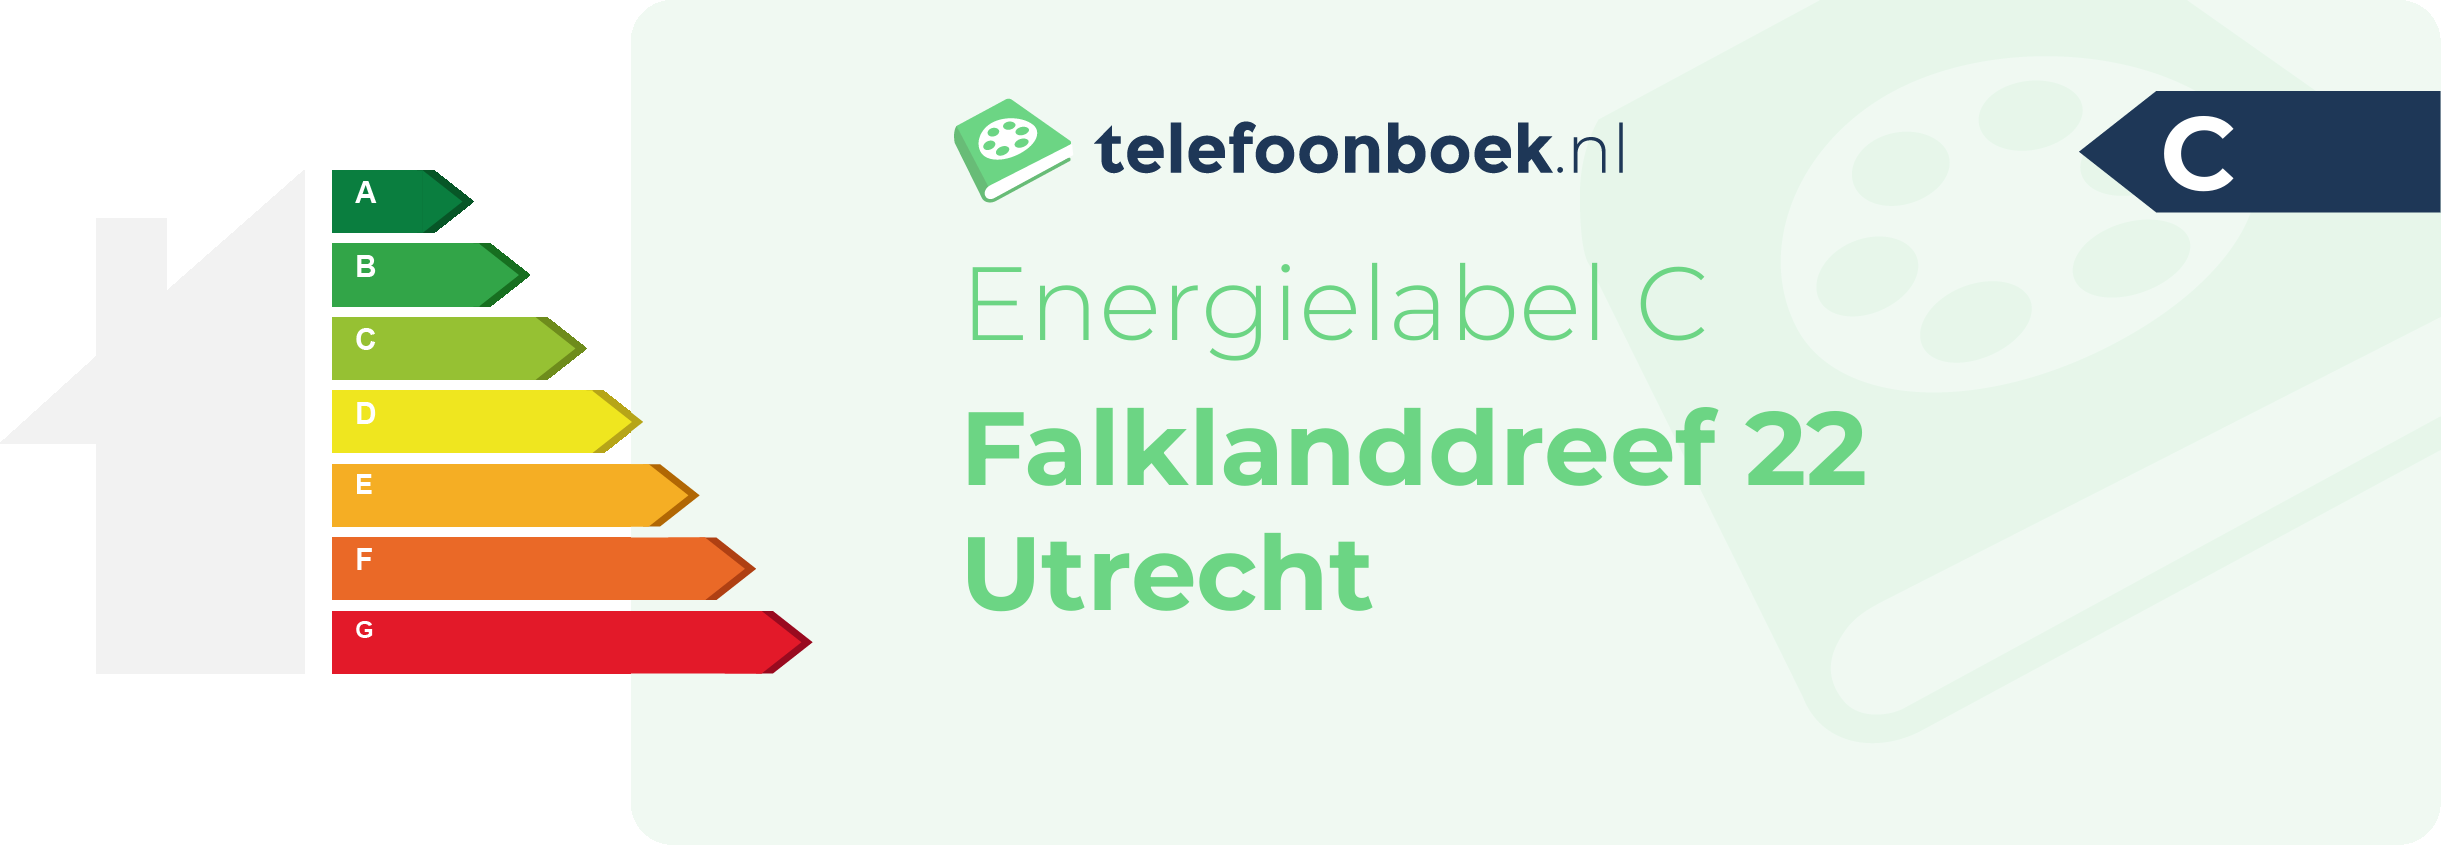 Energielabel Falklanddreef 22 Utrecht